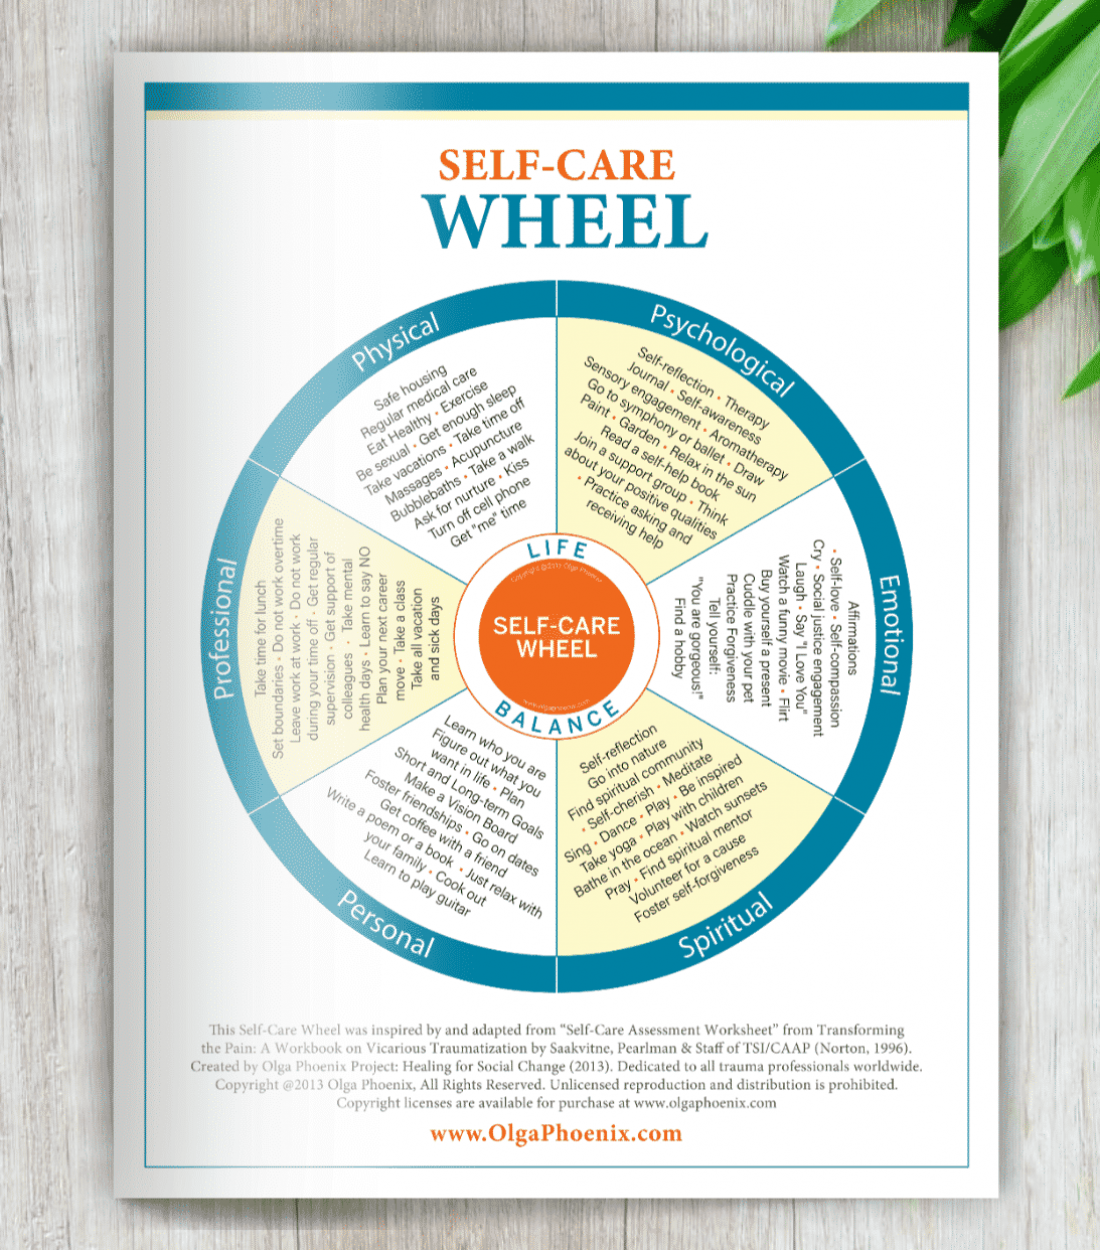 Self-Care Wheel